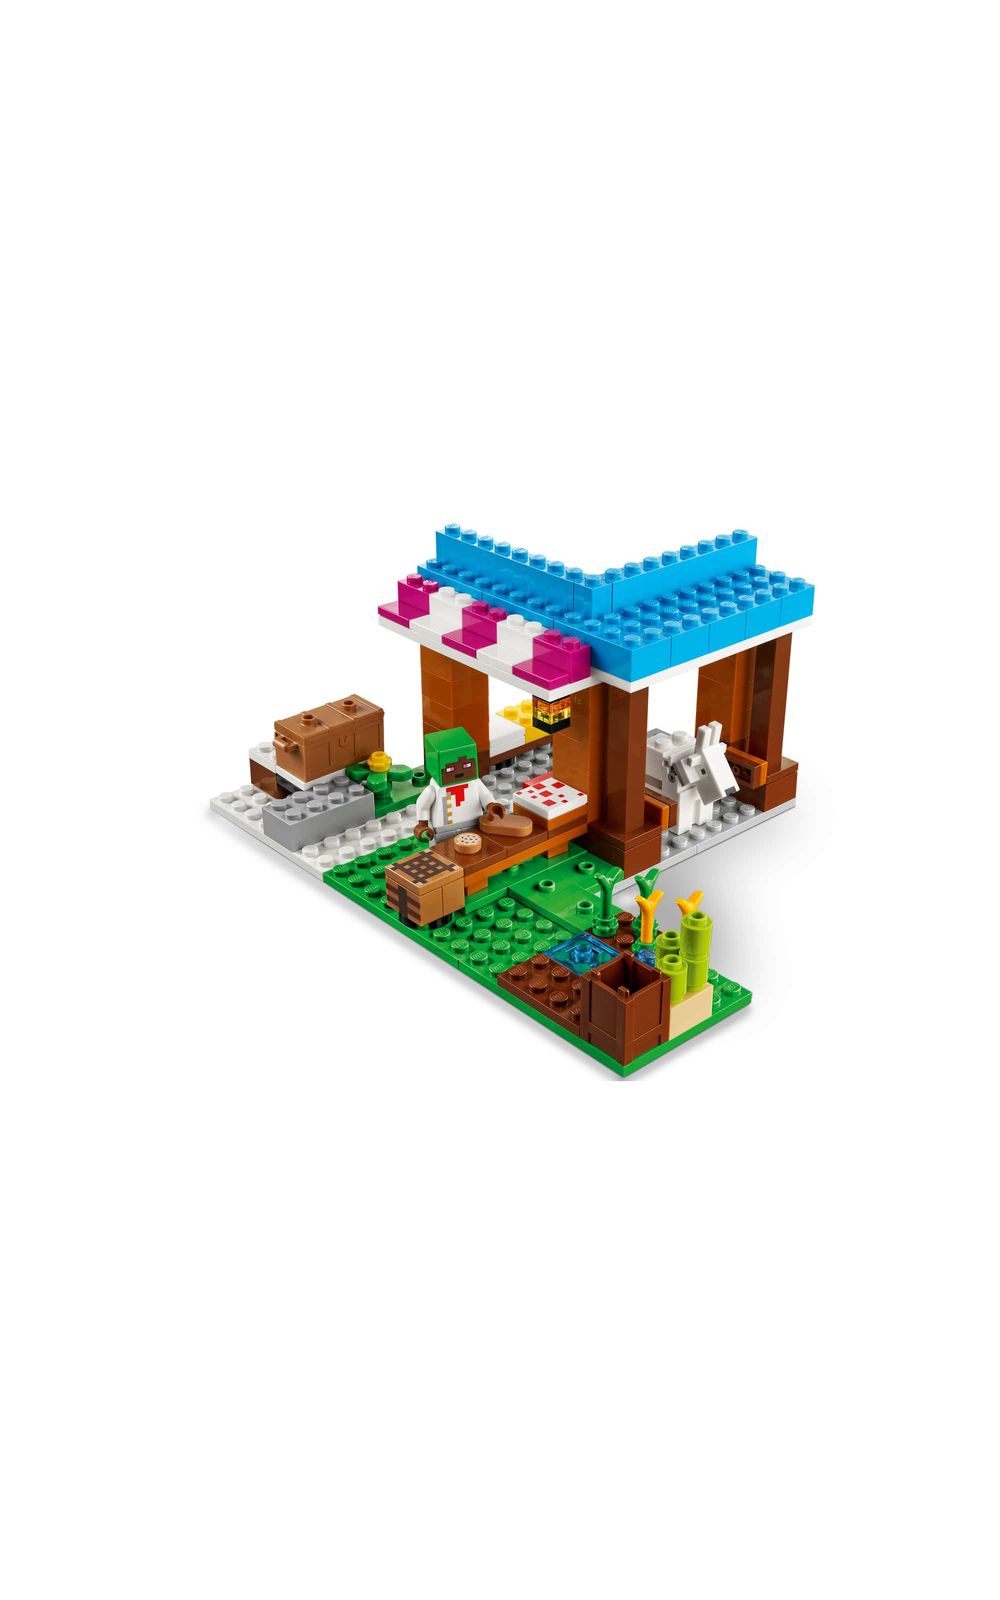 LEGO - Minecraft - A Padaria - 21184 - Lista Kids Todo Cartoes